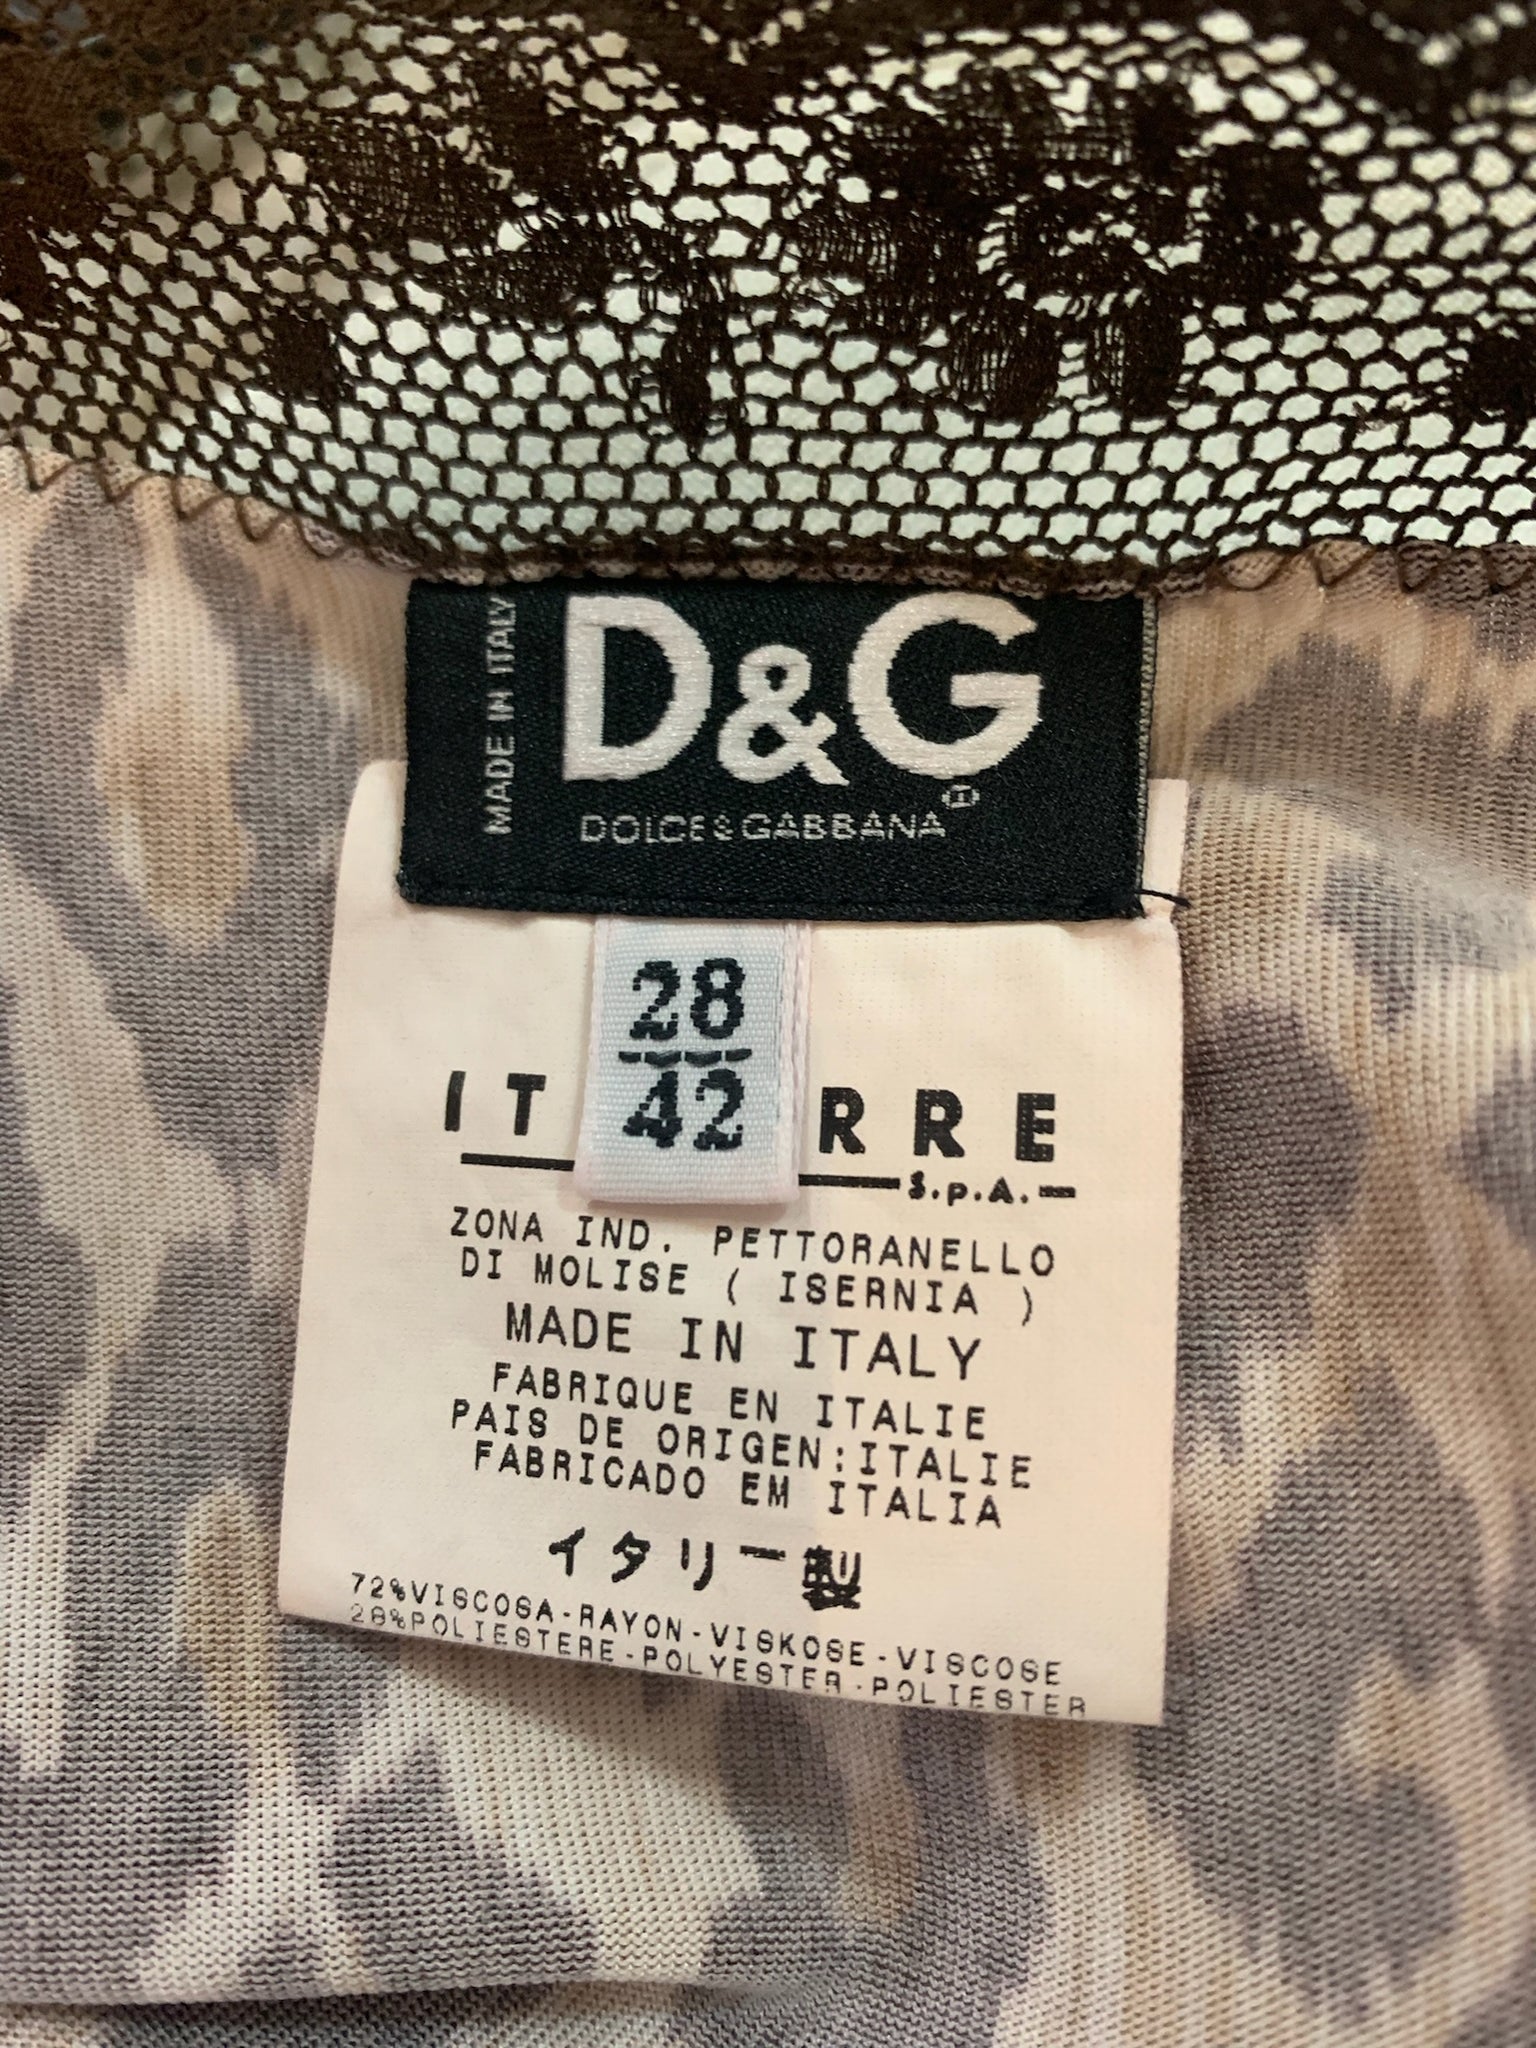 Vintage Dolce & Gabbana Leopard Print Slip Wiggle Dress Size XS S 90's Y2K  D&G